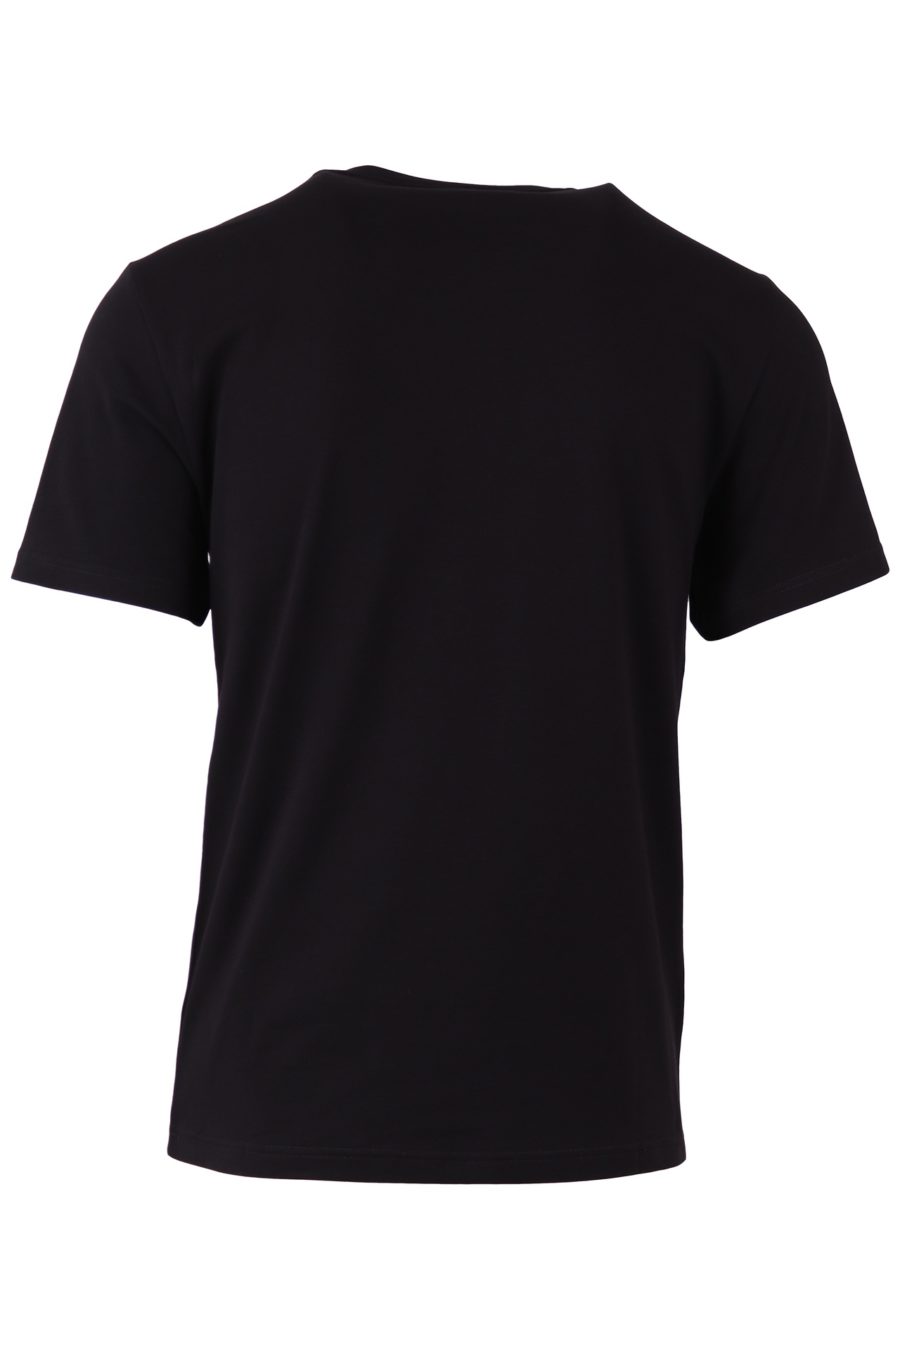 Camiseta Moschino Couture negra con logo y doble pregunta delantera - e8230946e6118de9d84ad6beca38f607106adb35